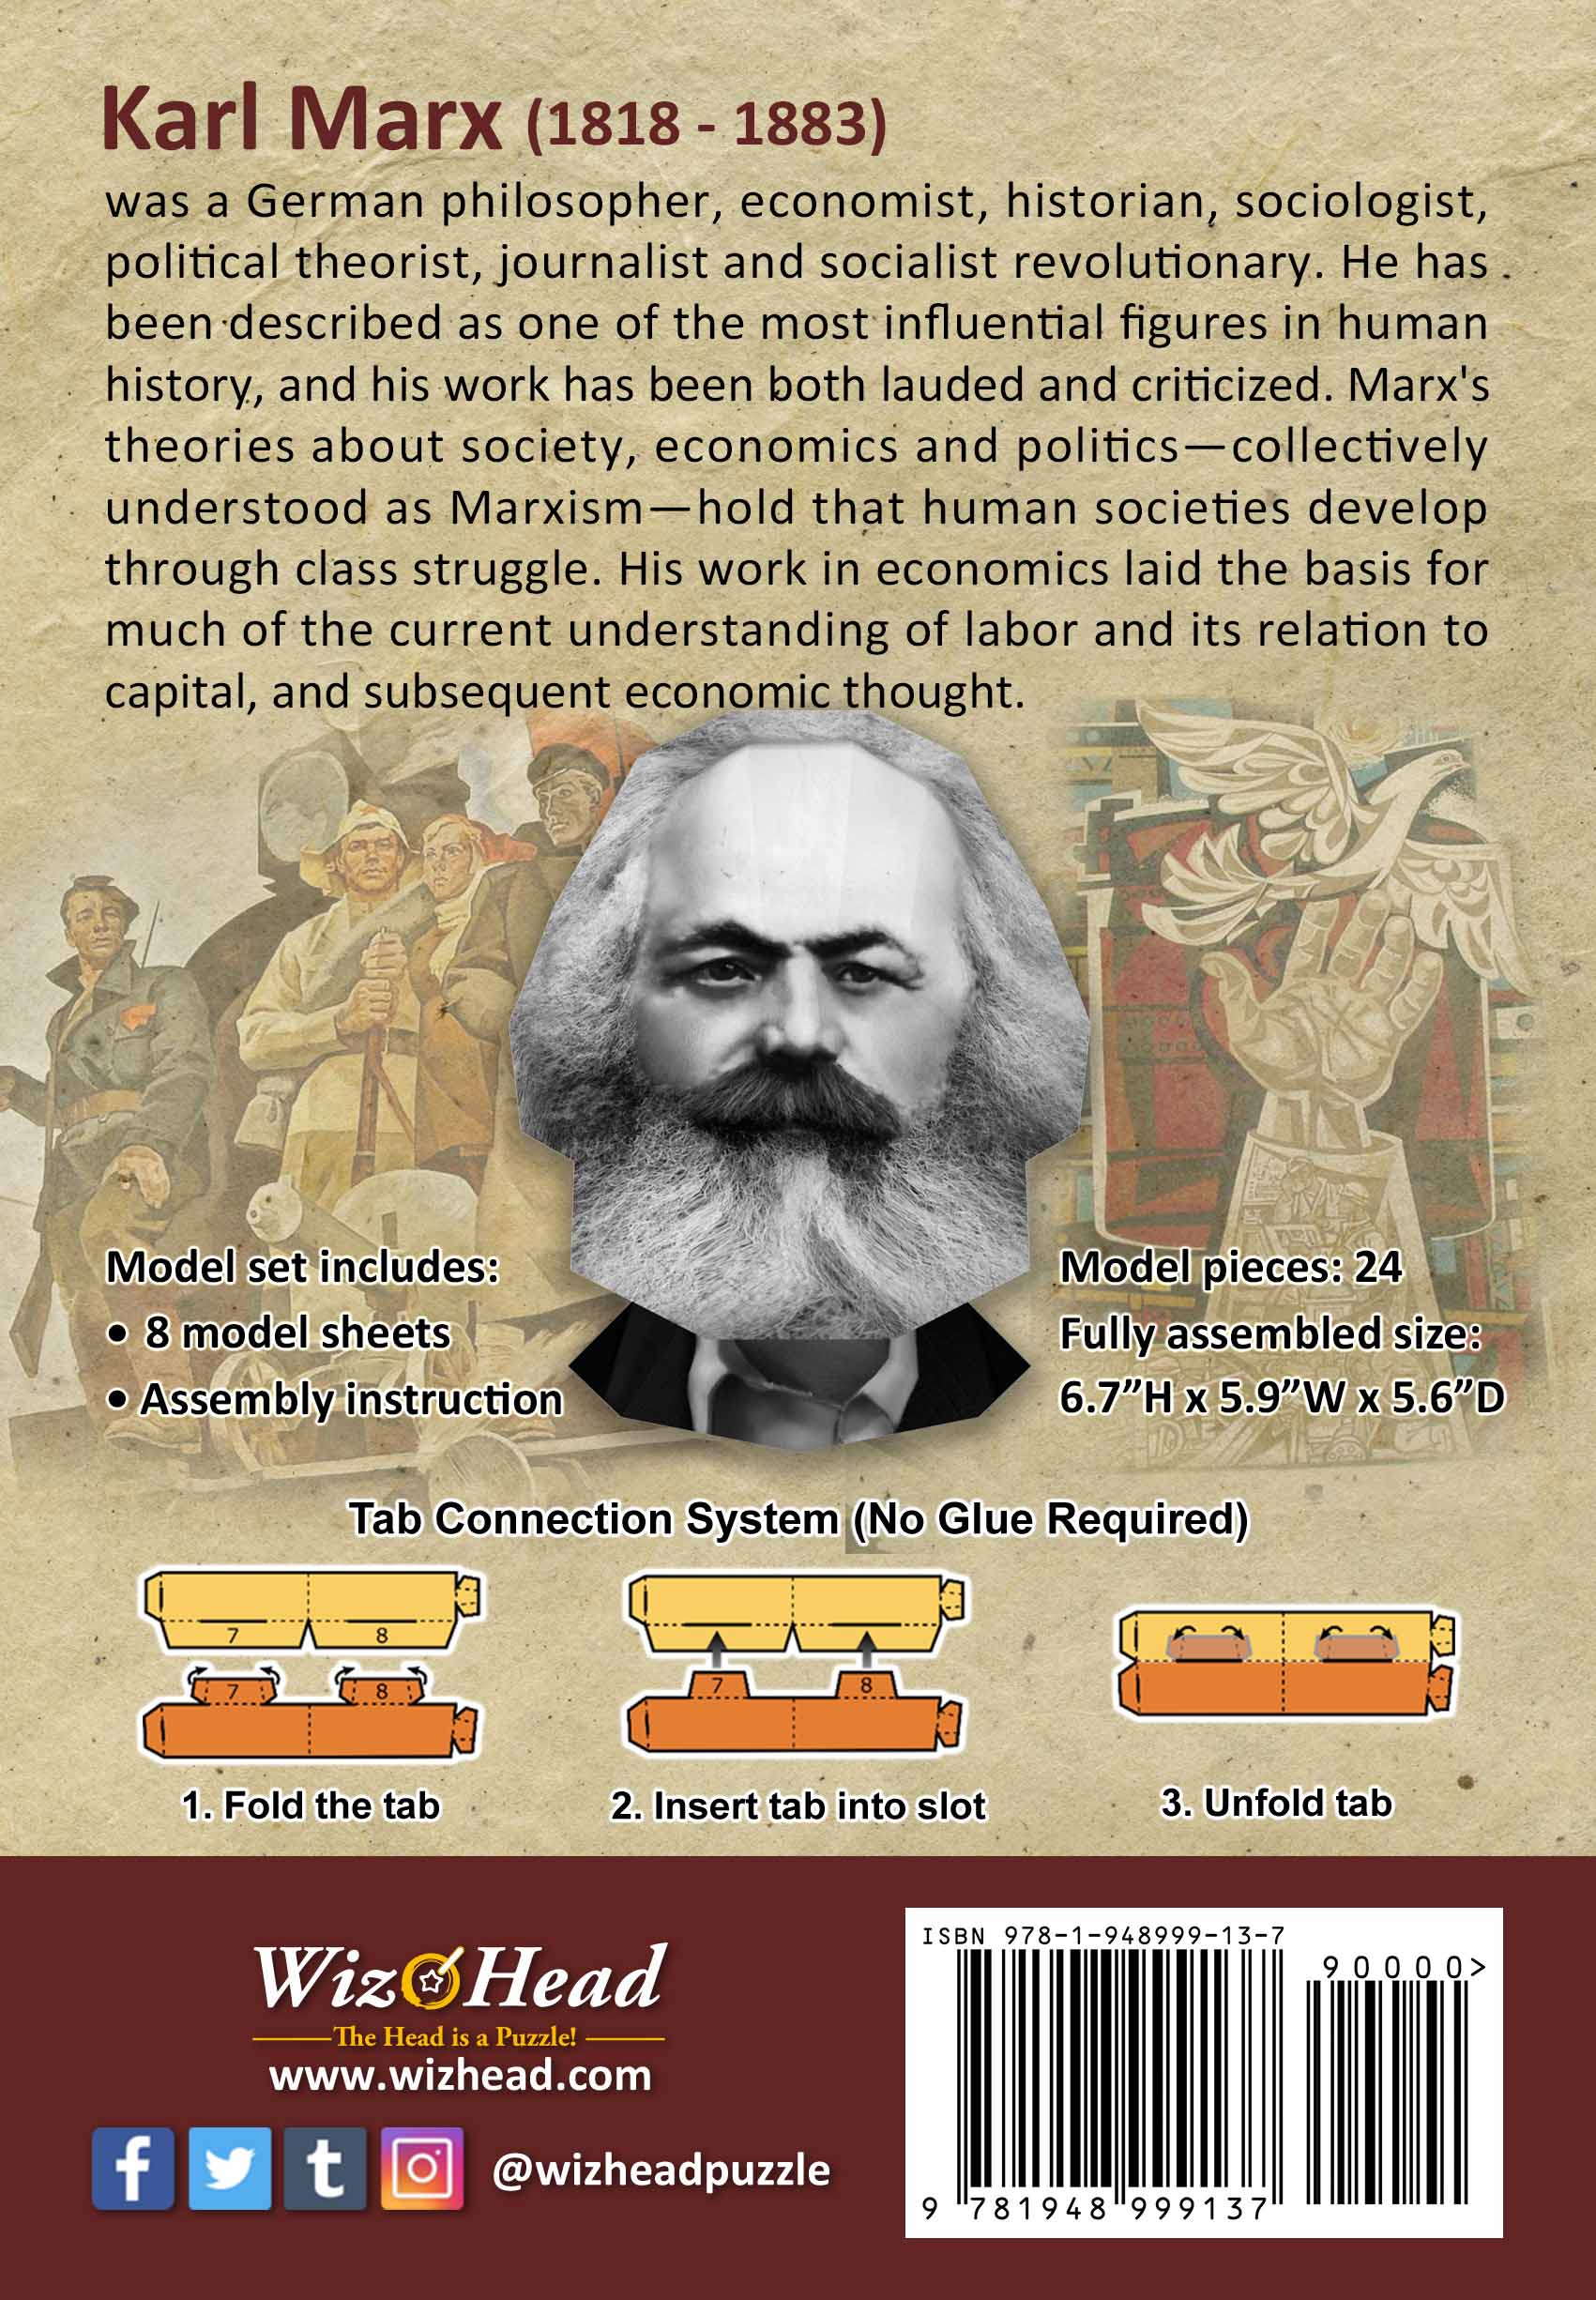 Karl Marx (Full Size)